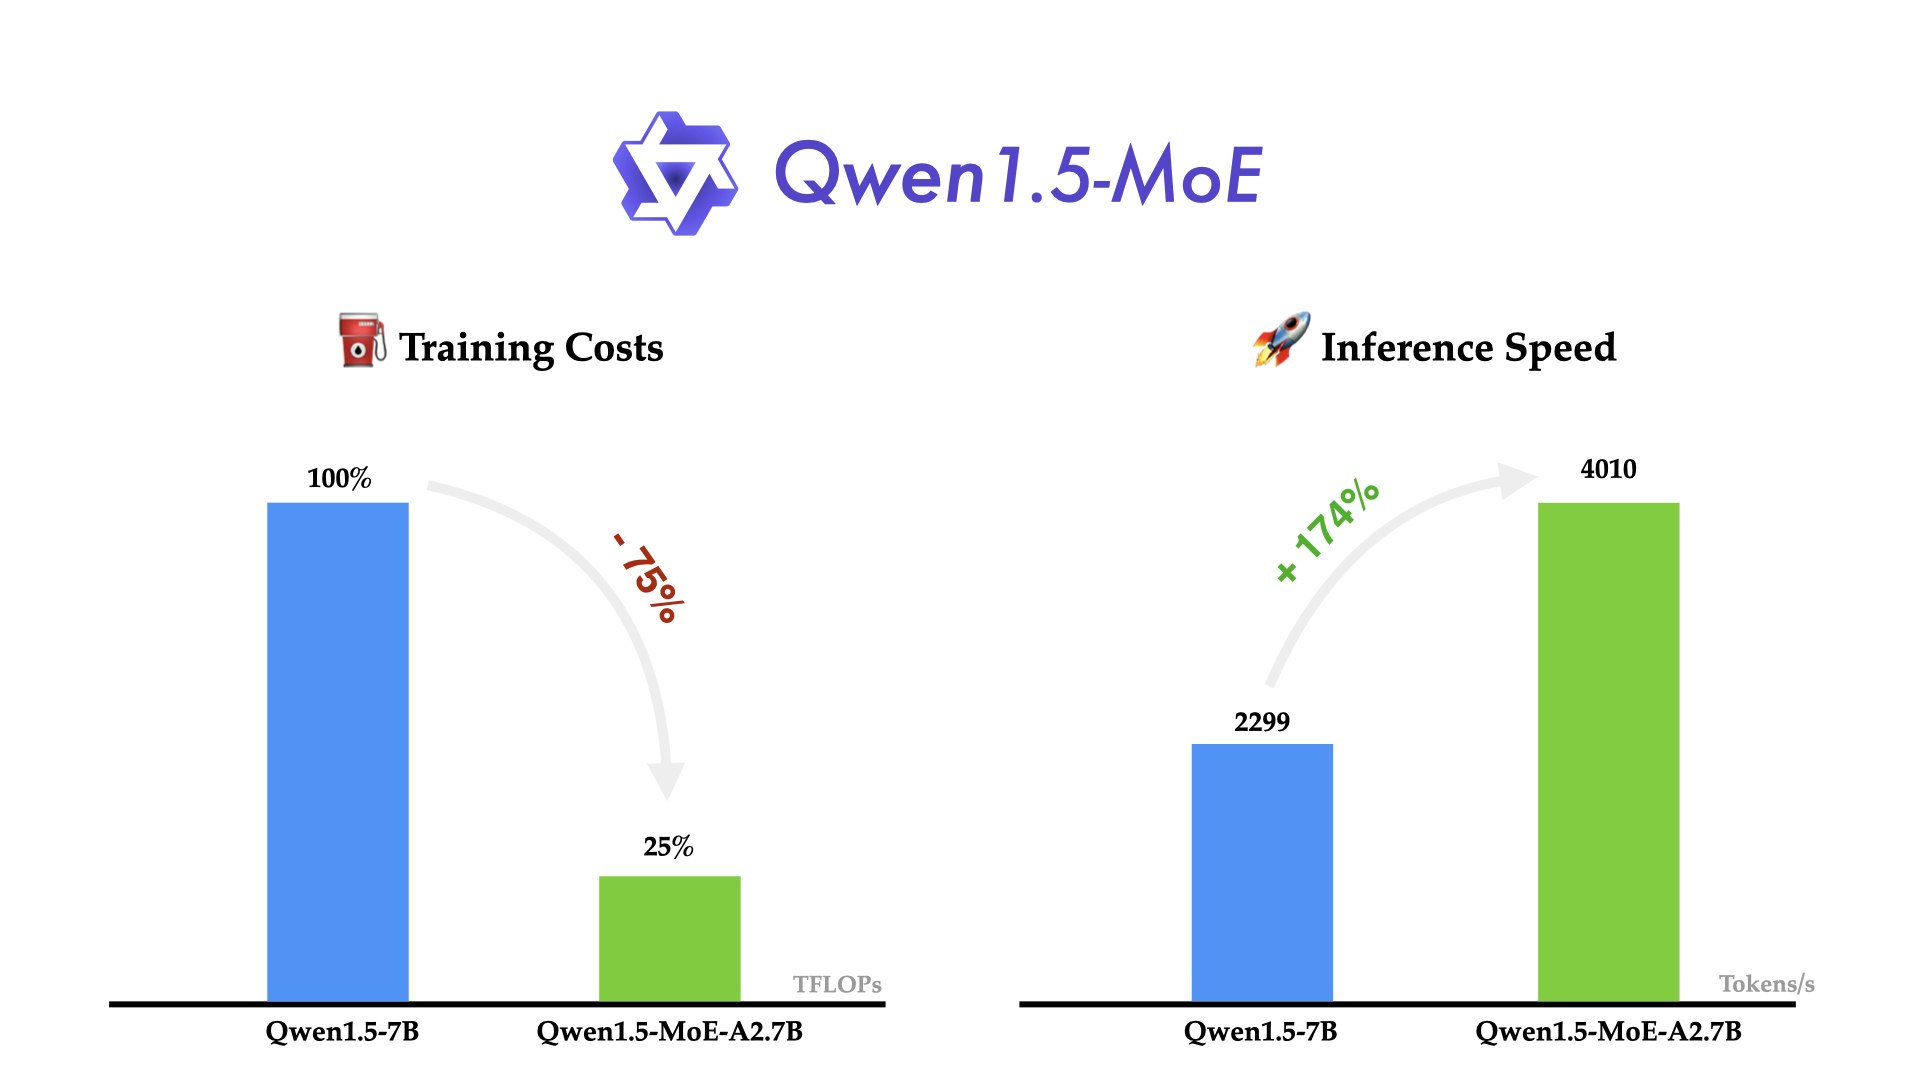 qwen-1-5-moe - Highly efficient mixture-of-expert (MoE) model from Alibaba